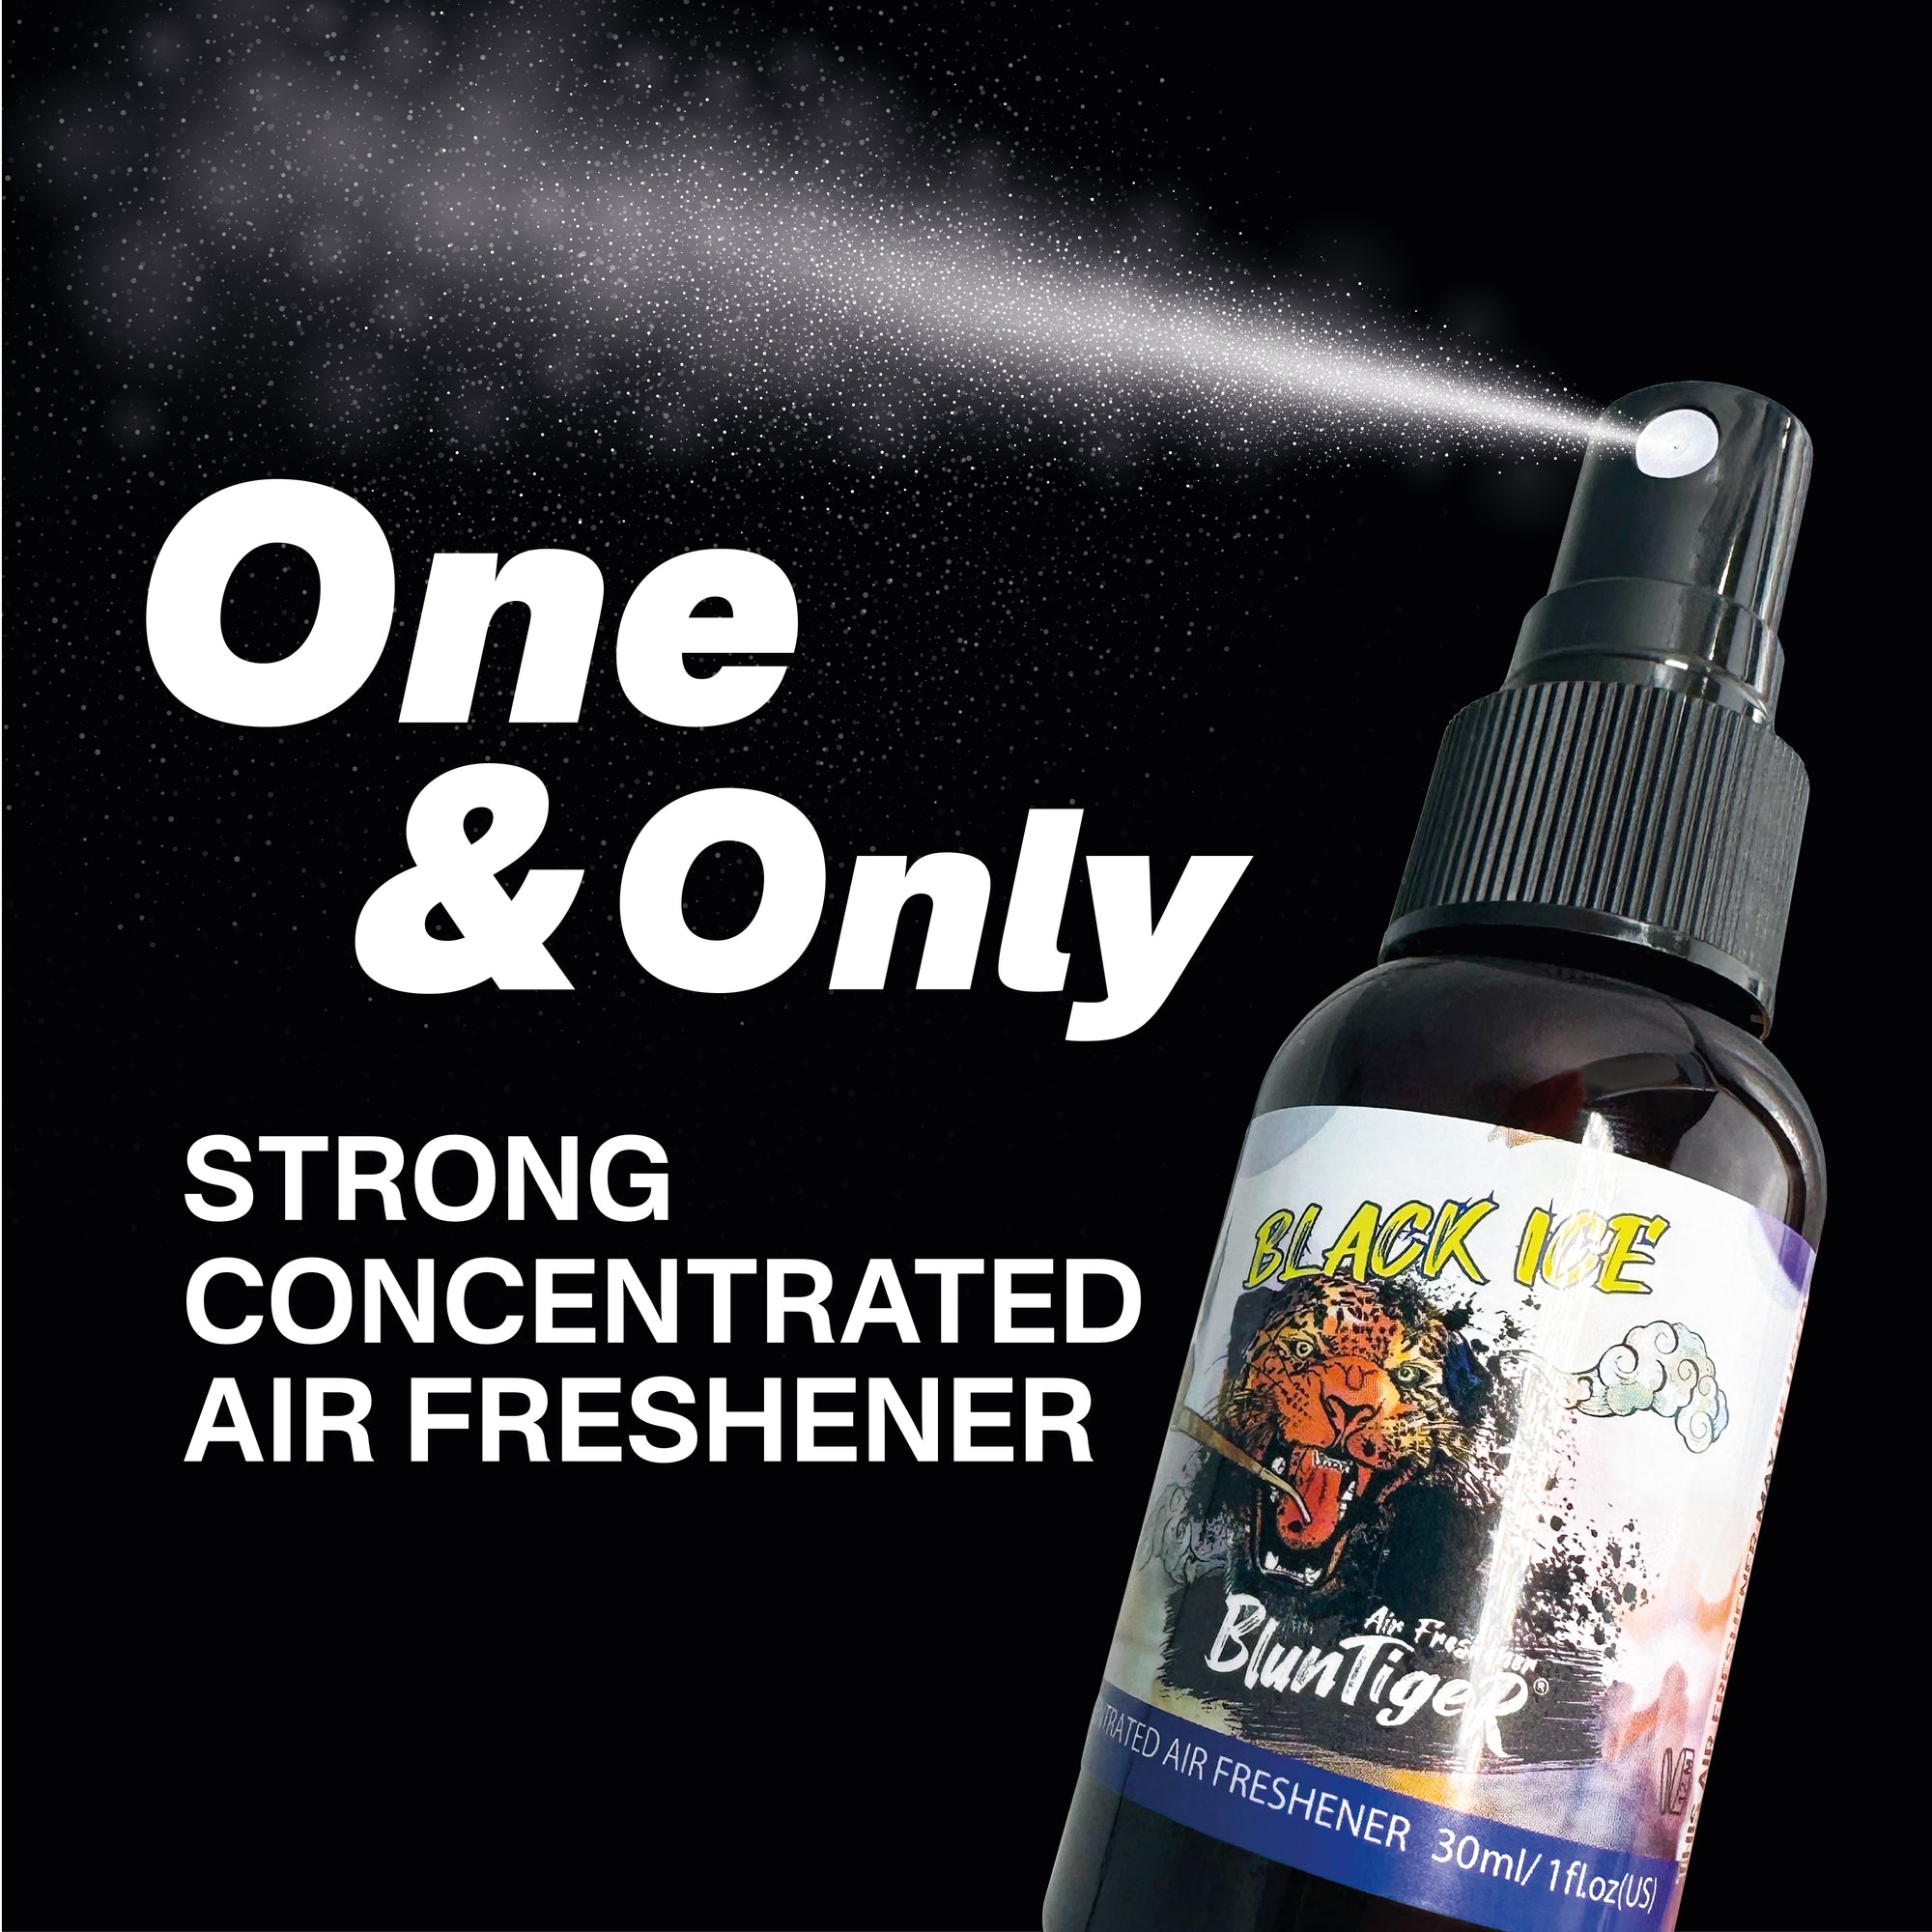 Air Freshener 1oz BLACK ICE